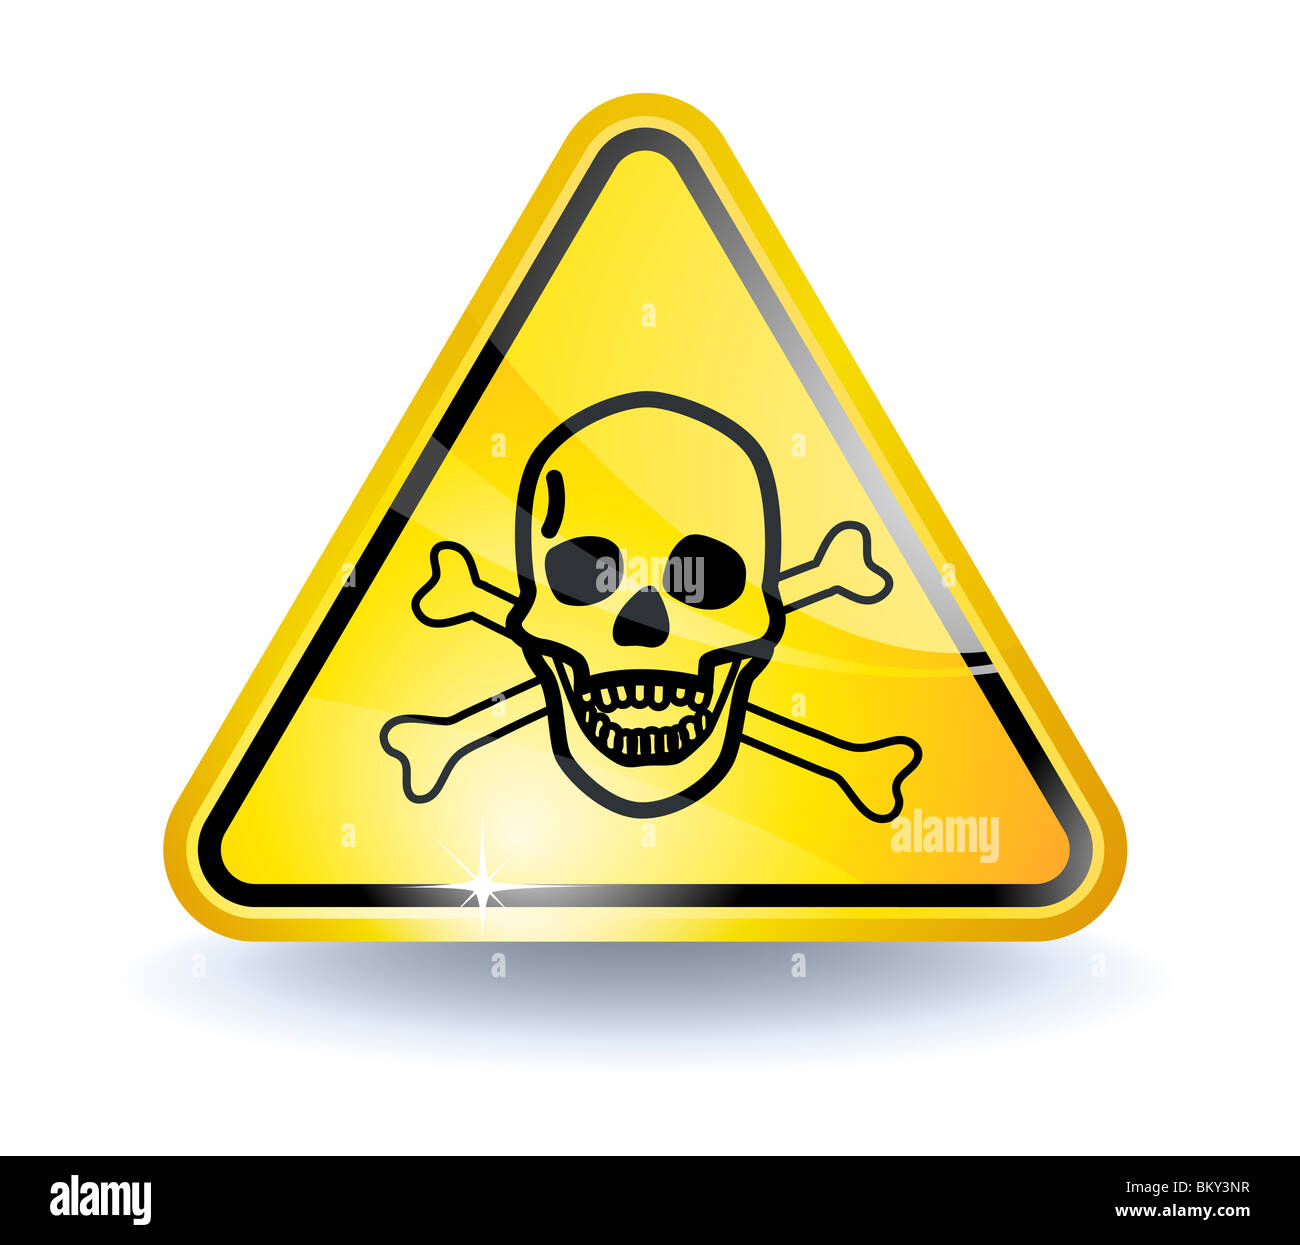 Danger Toxic Skull Yellow Sign Stock Photos & Danger Toxic Skull Yellow ...